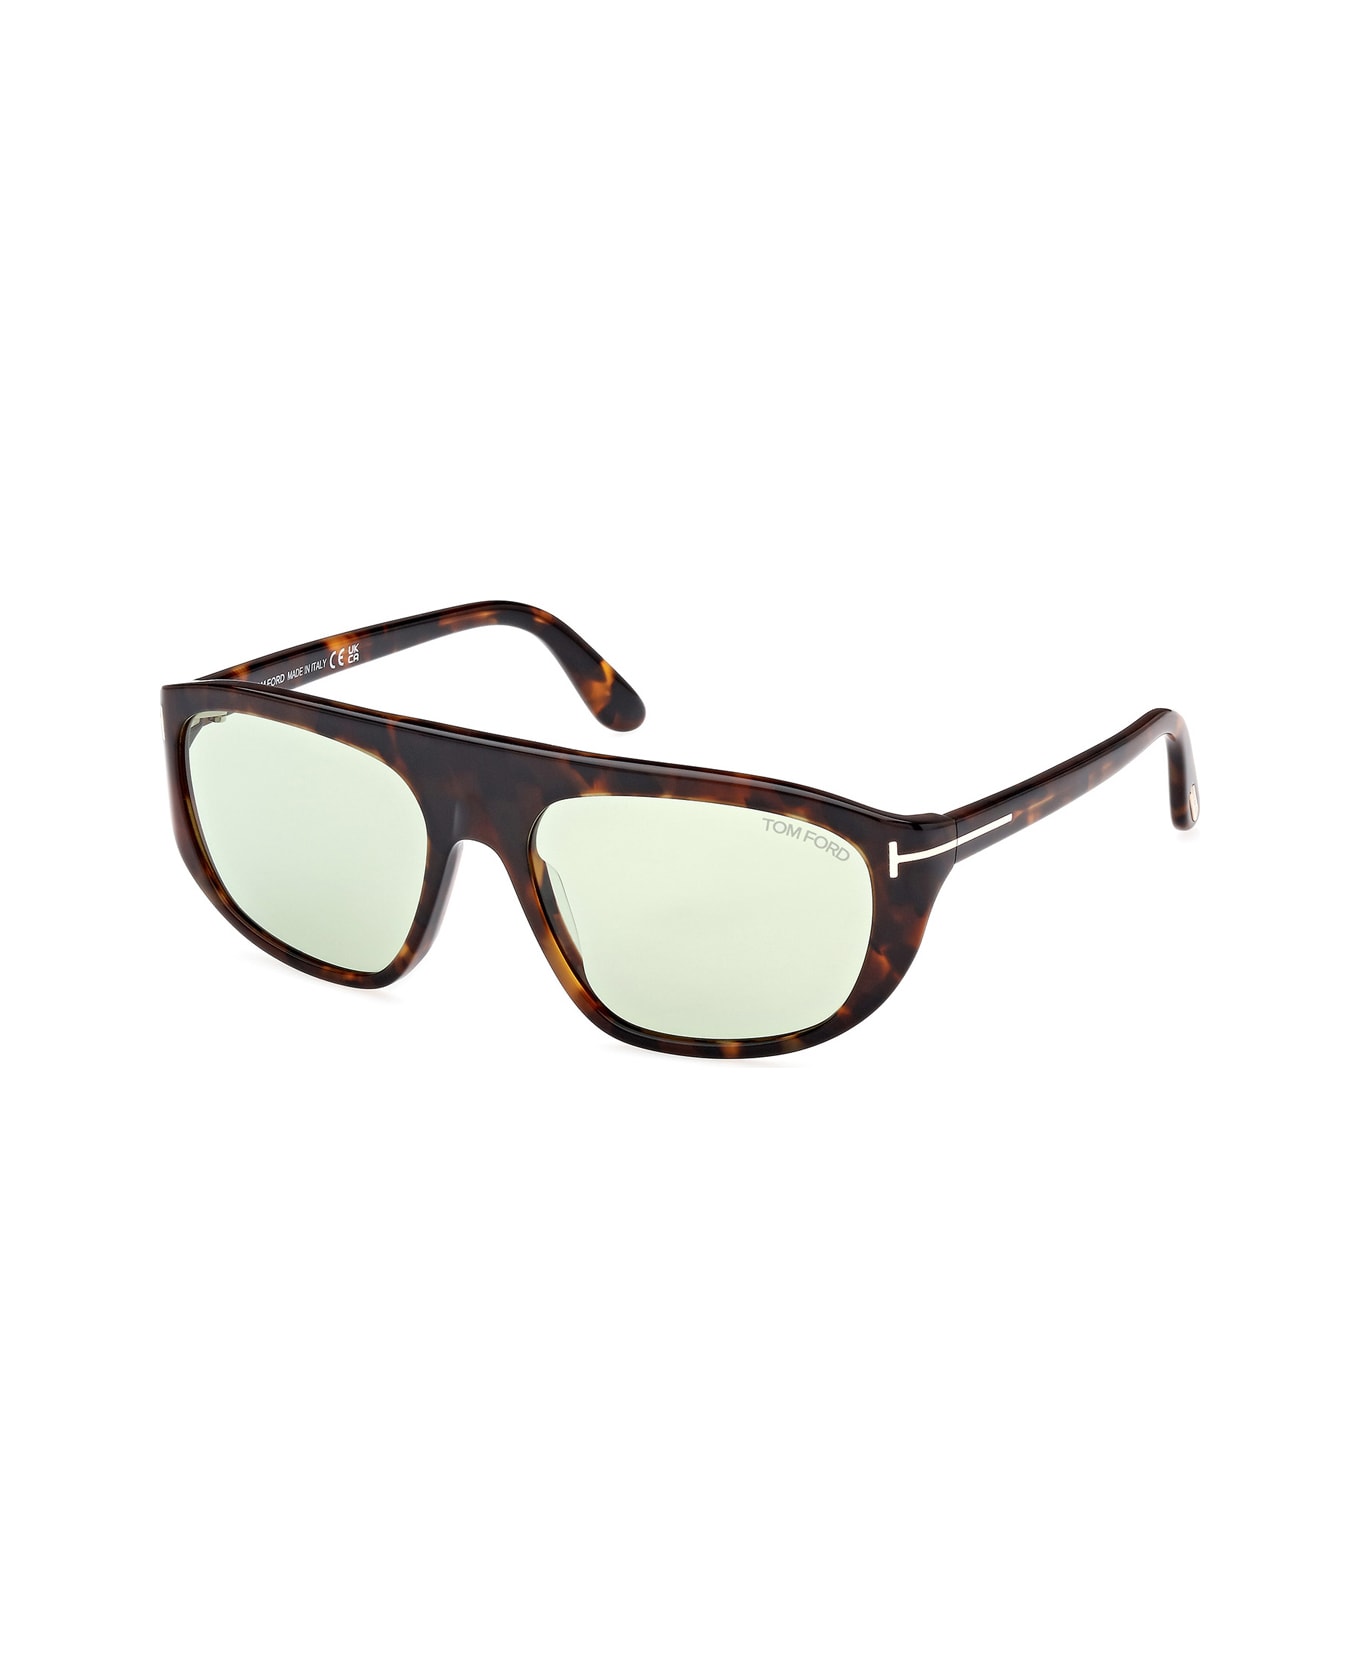 Tom Ford Eyewear Ft1002 Sunglasses - Marrone サングラス